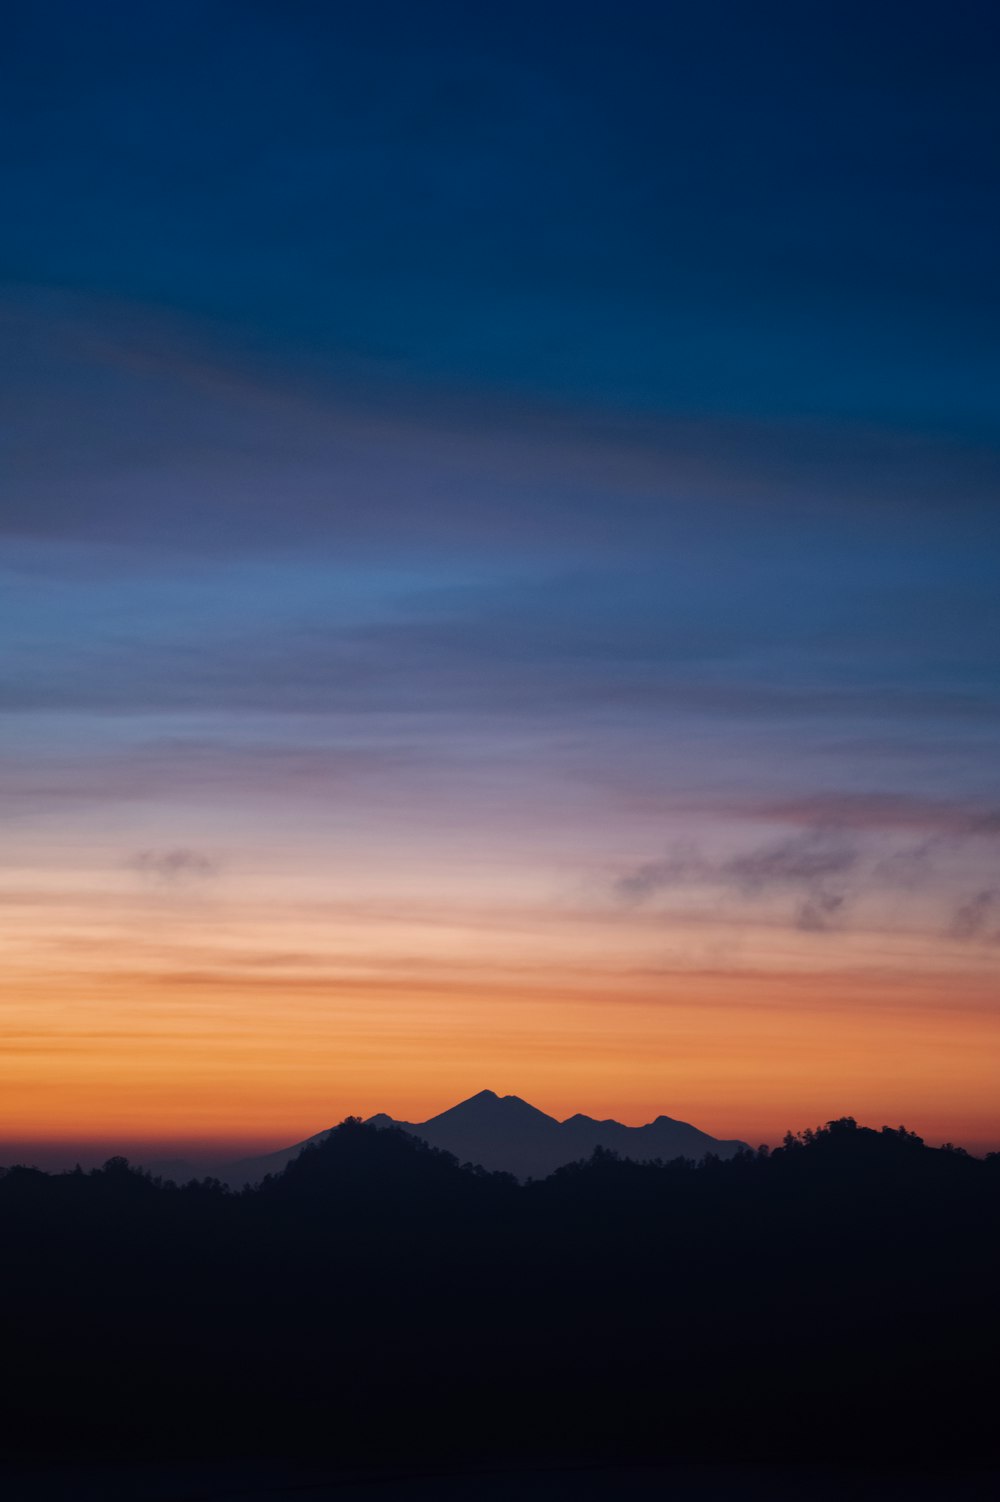 a mountain range at sunset